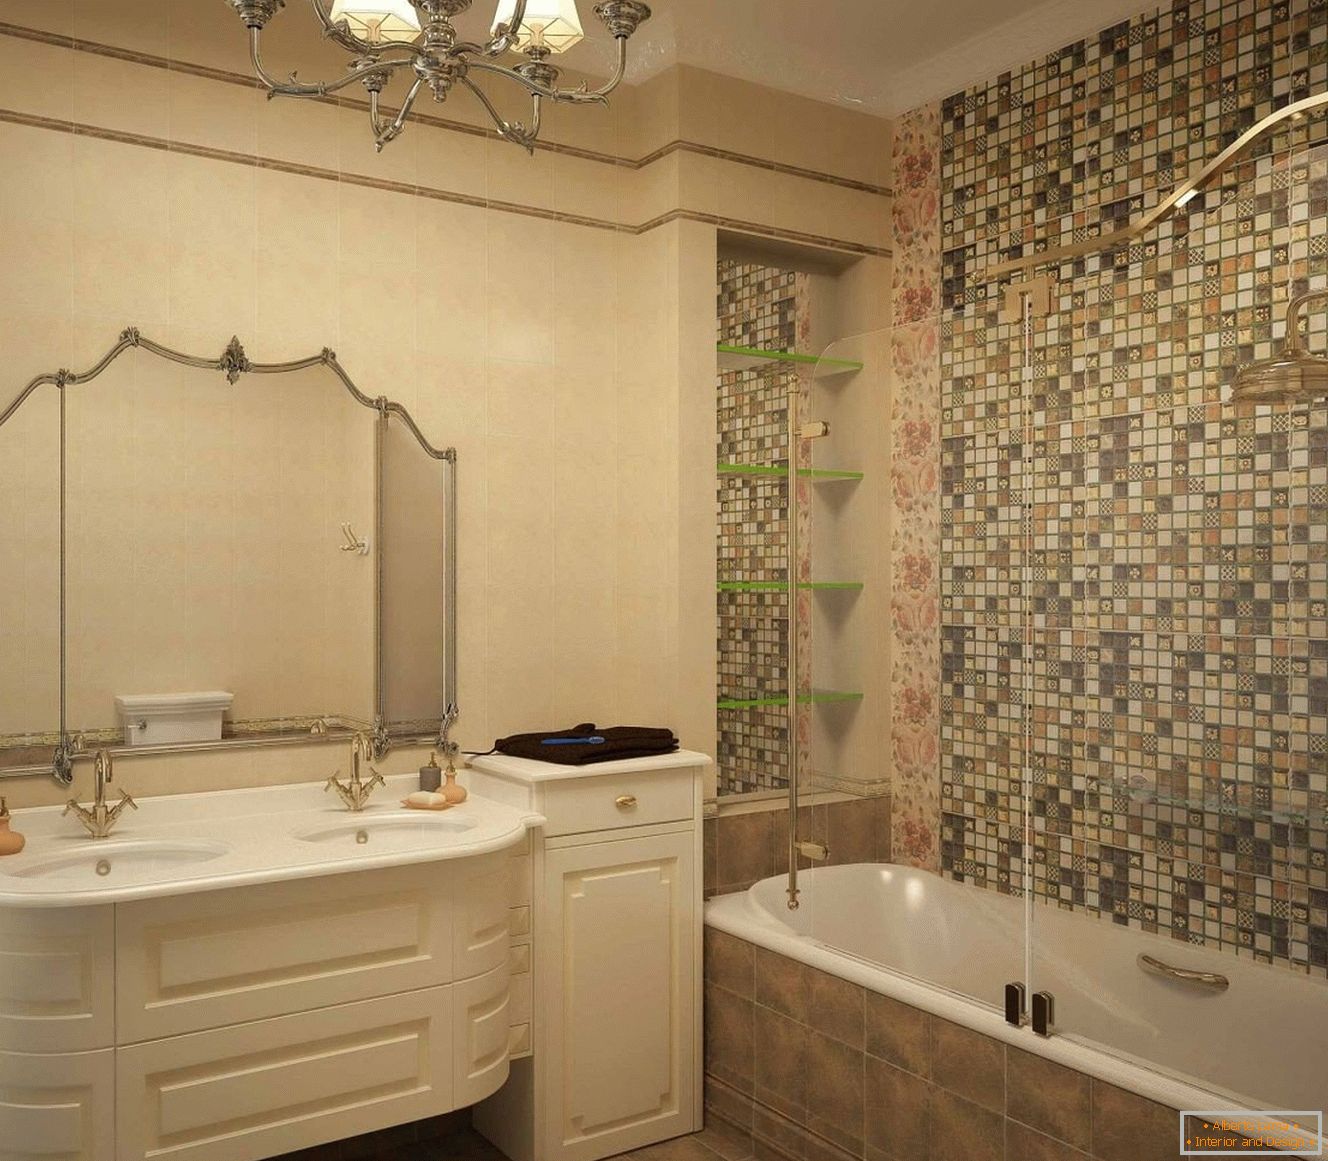 Bathroom interior in classic style